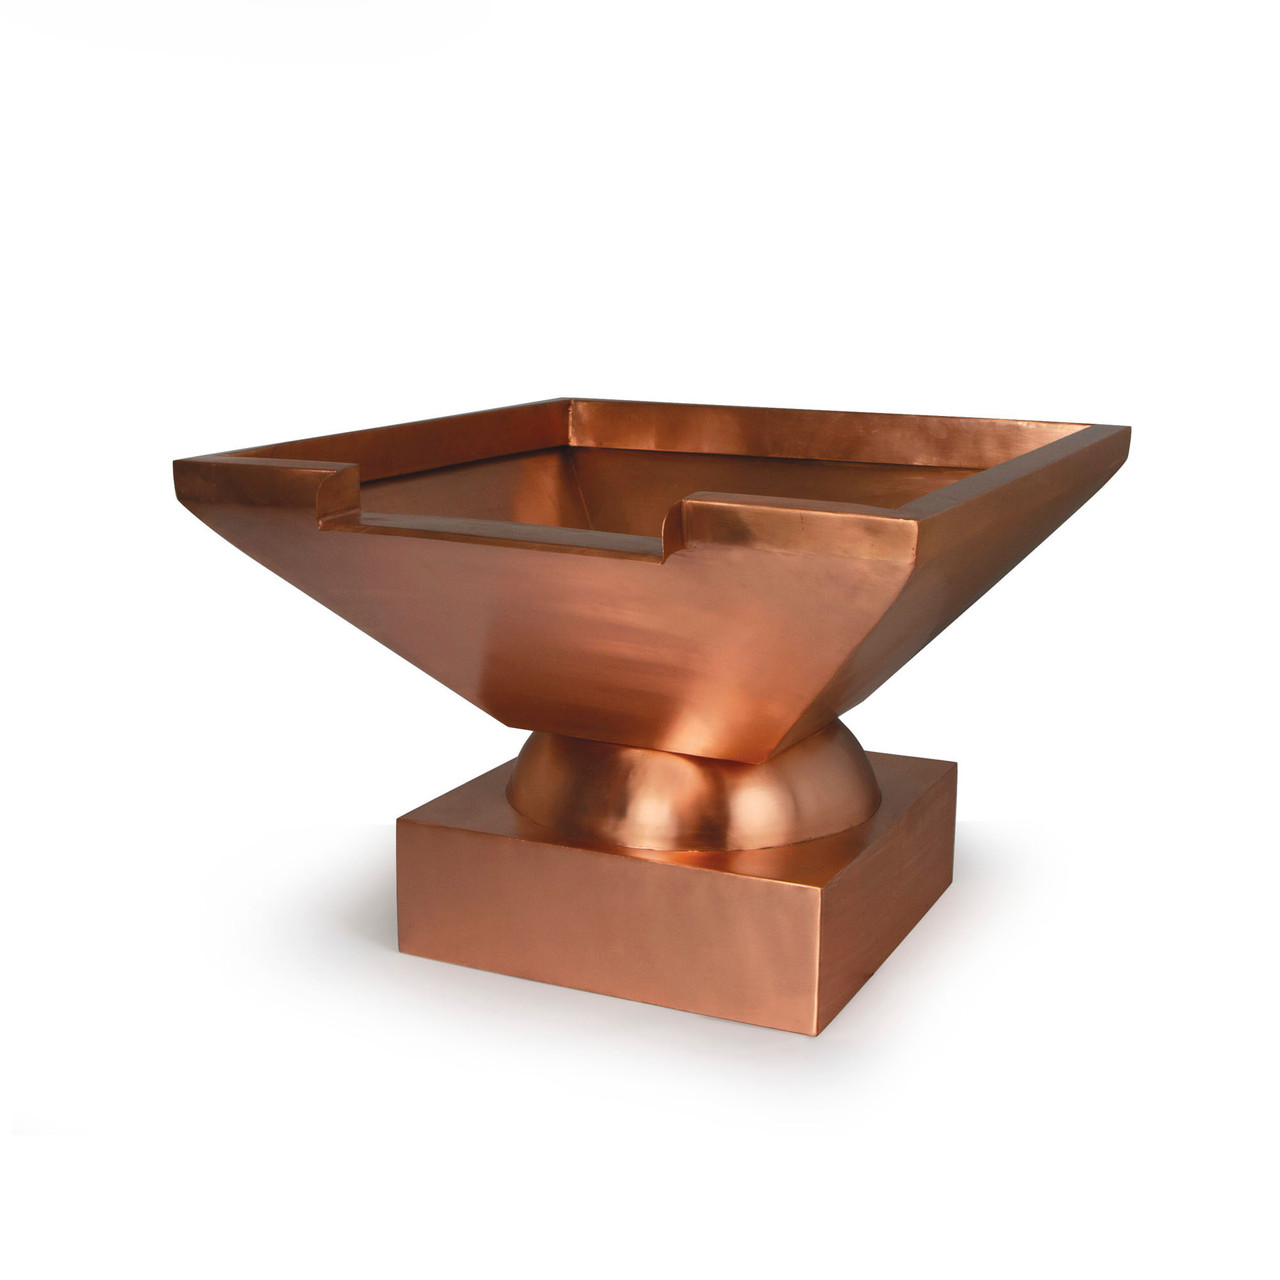 Atlantic Copper Bowl Pedestal